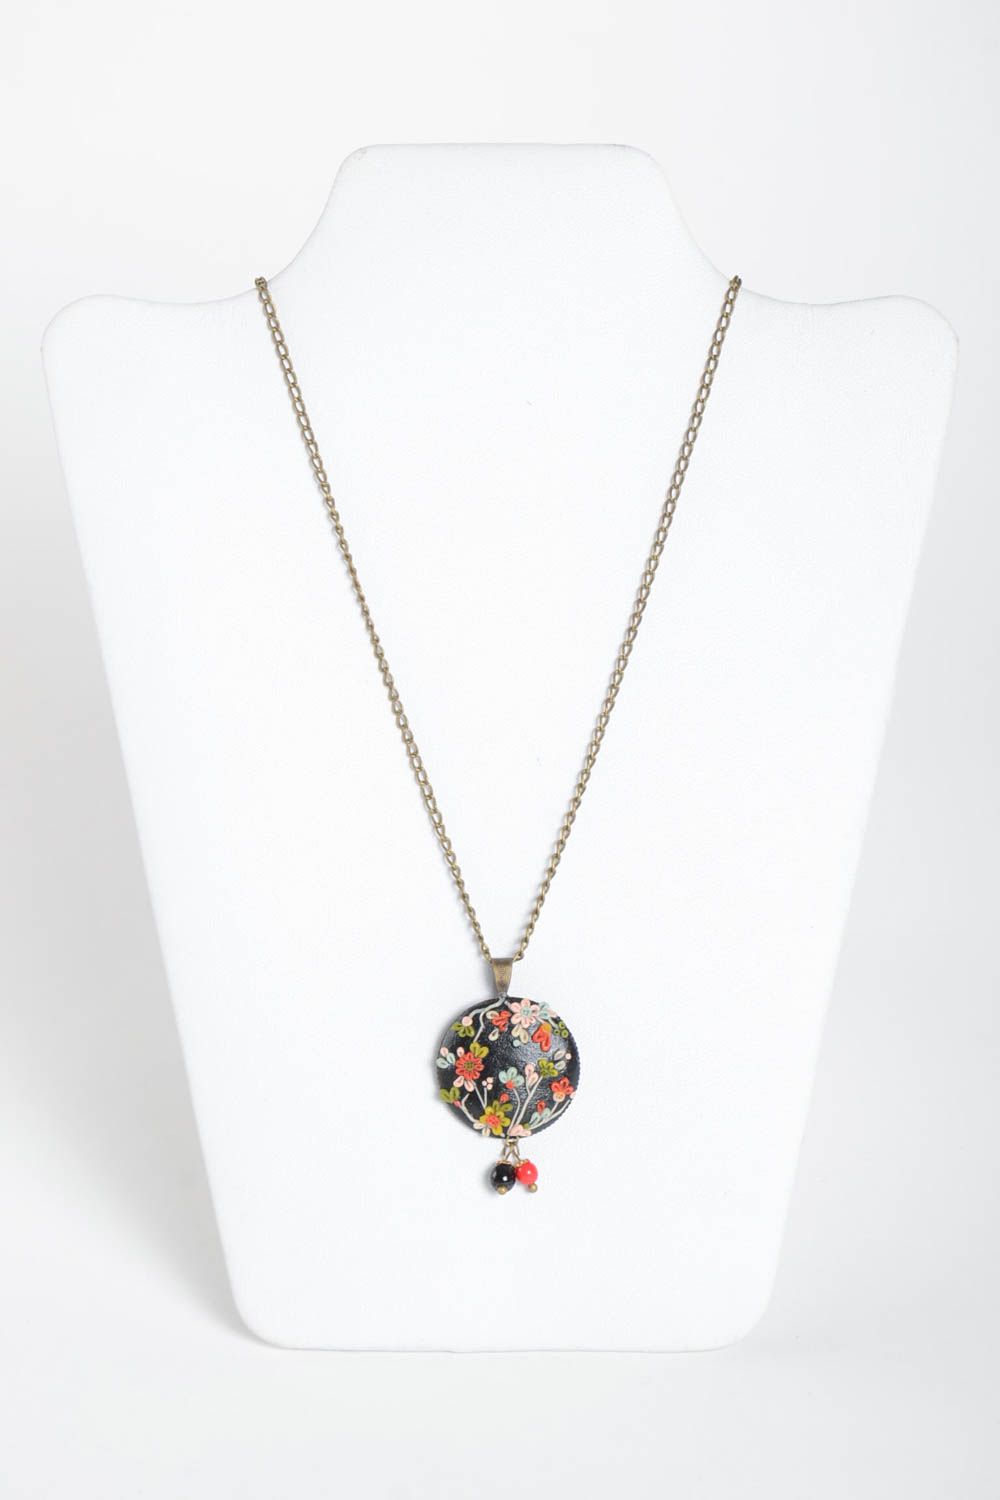 Stylish handmade plastic flower pendant costume jewelry designs gifts for her photo 2